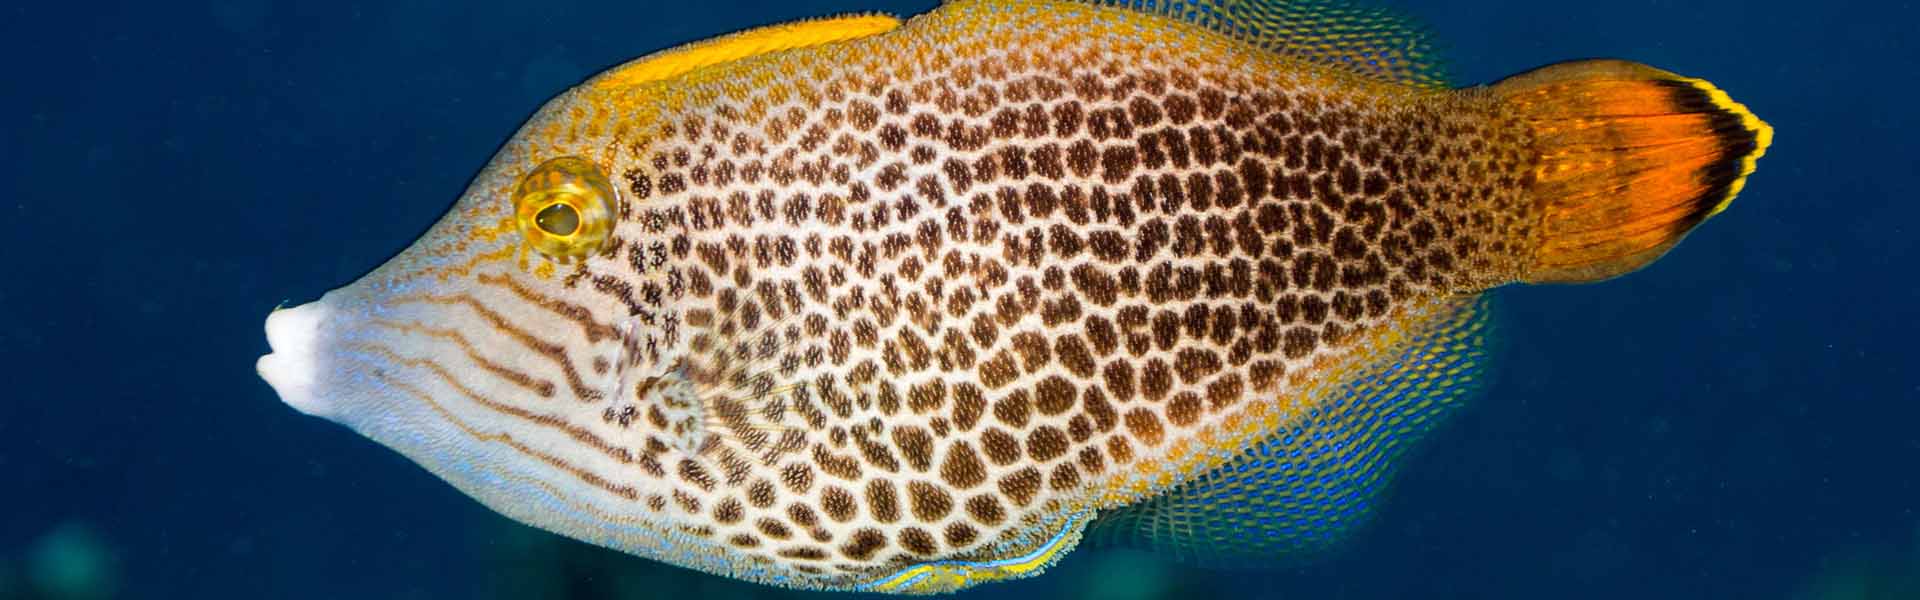 Randall's Filefish